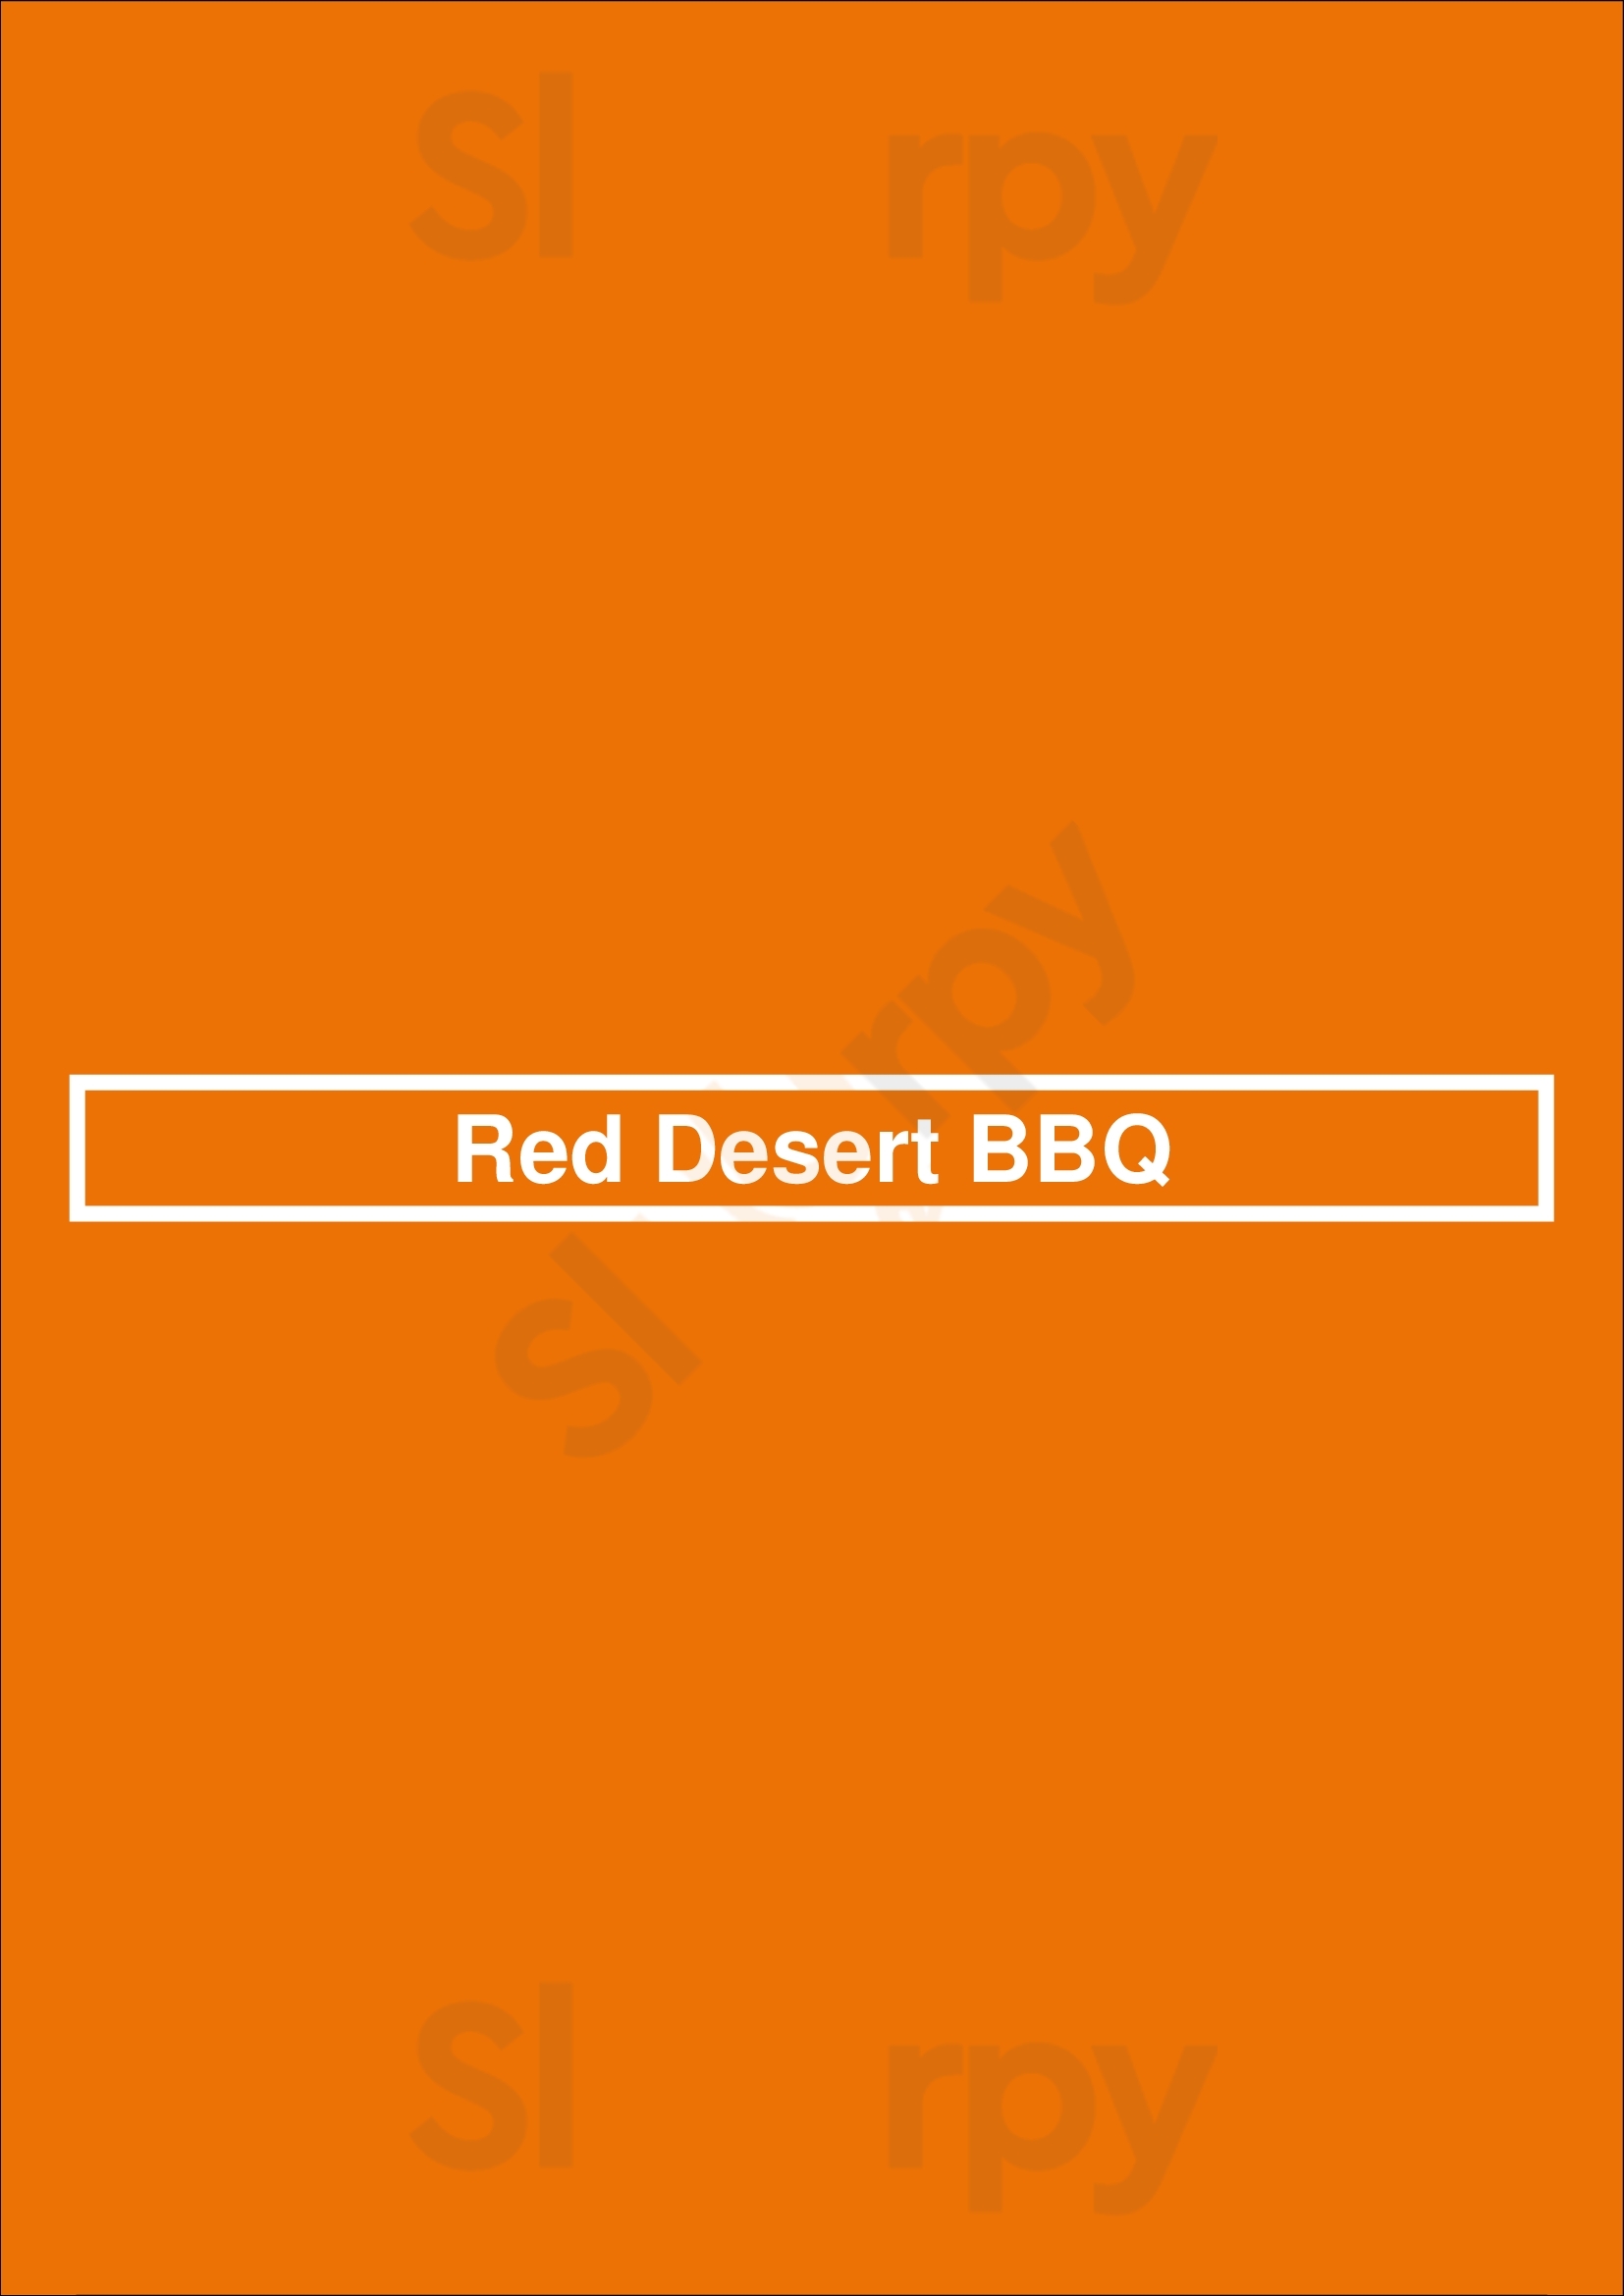 Red Desert Bbq Tucson Menu - 1